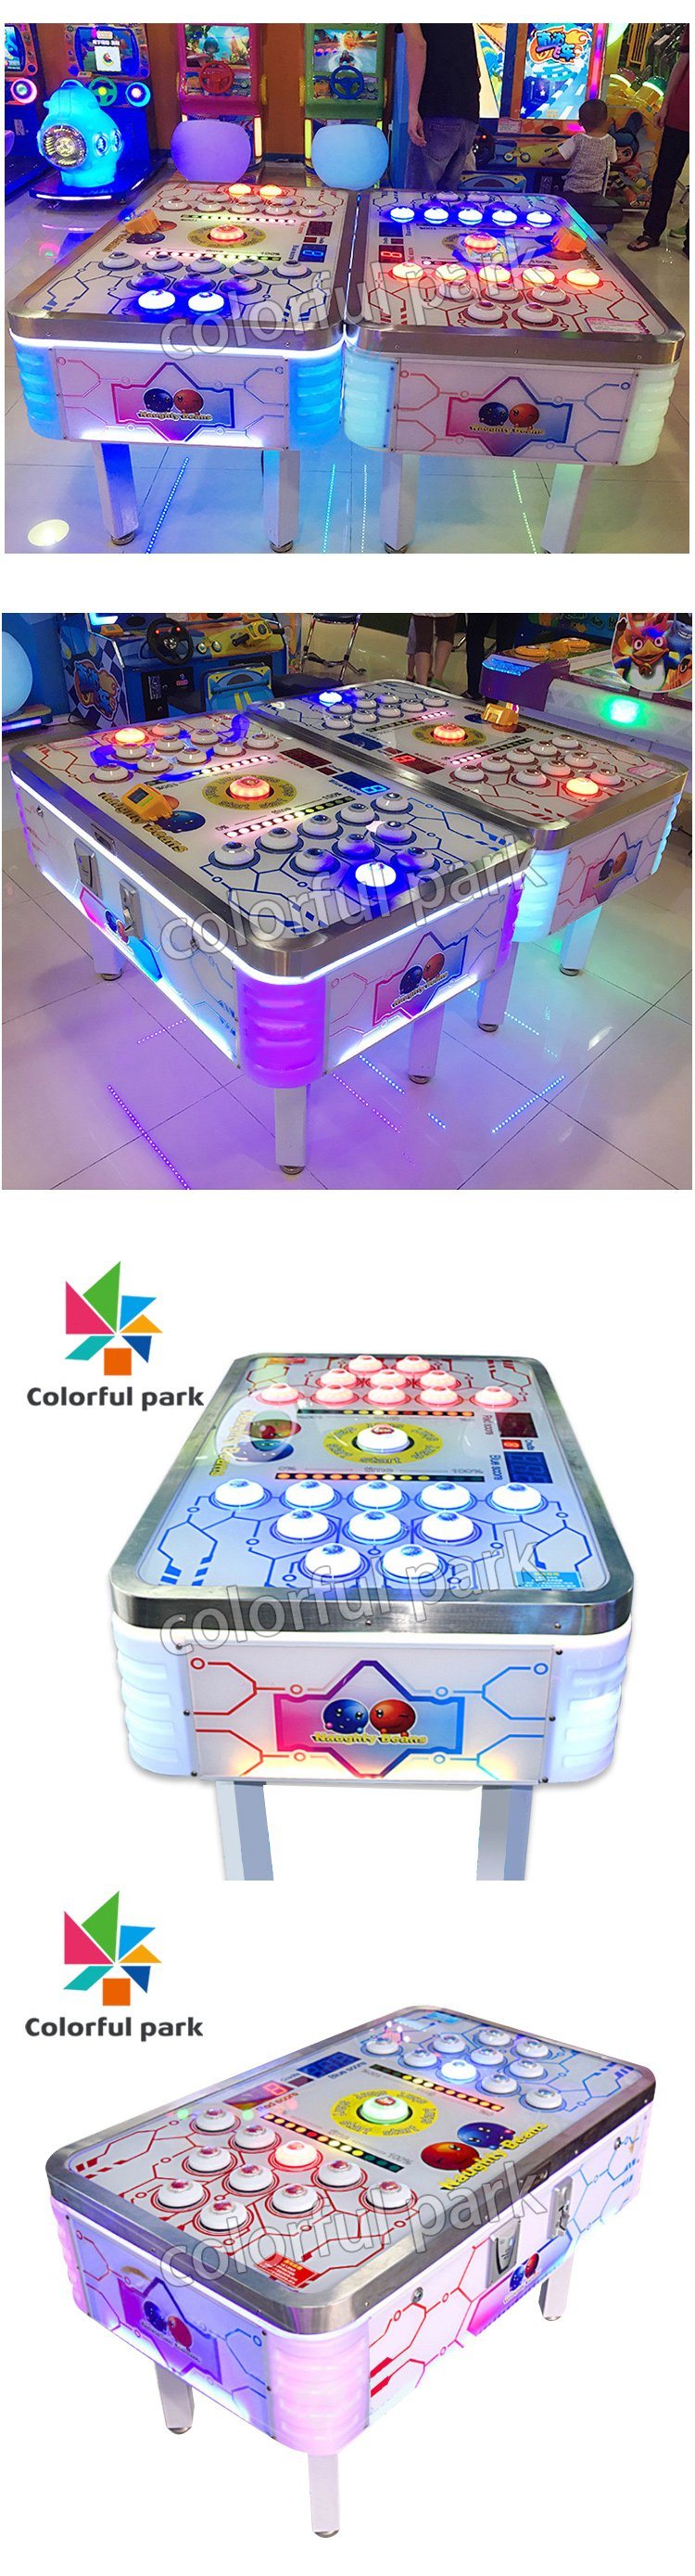 Colorful Park Hitting Game Machine Hit Beans Amusement Equipment Arcade Game 3D Game Machine